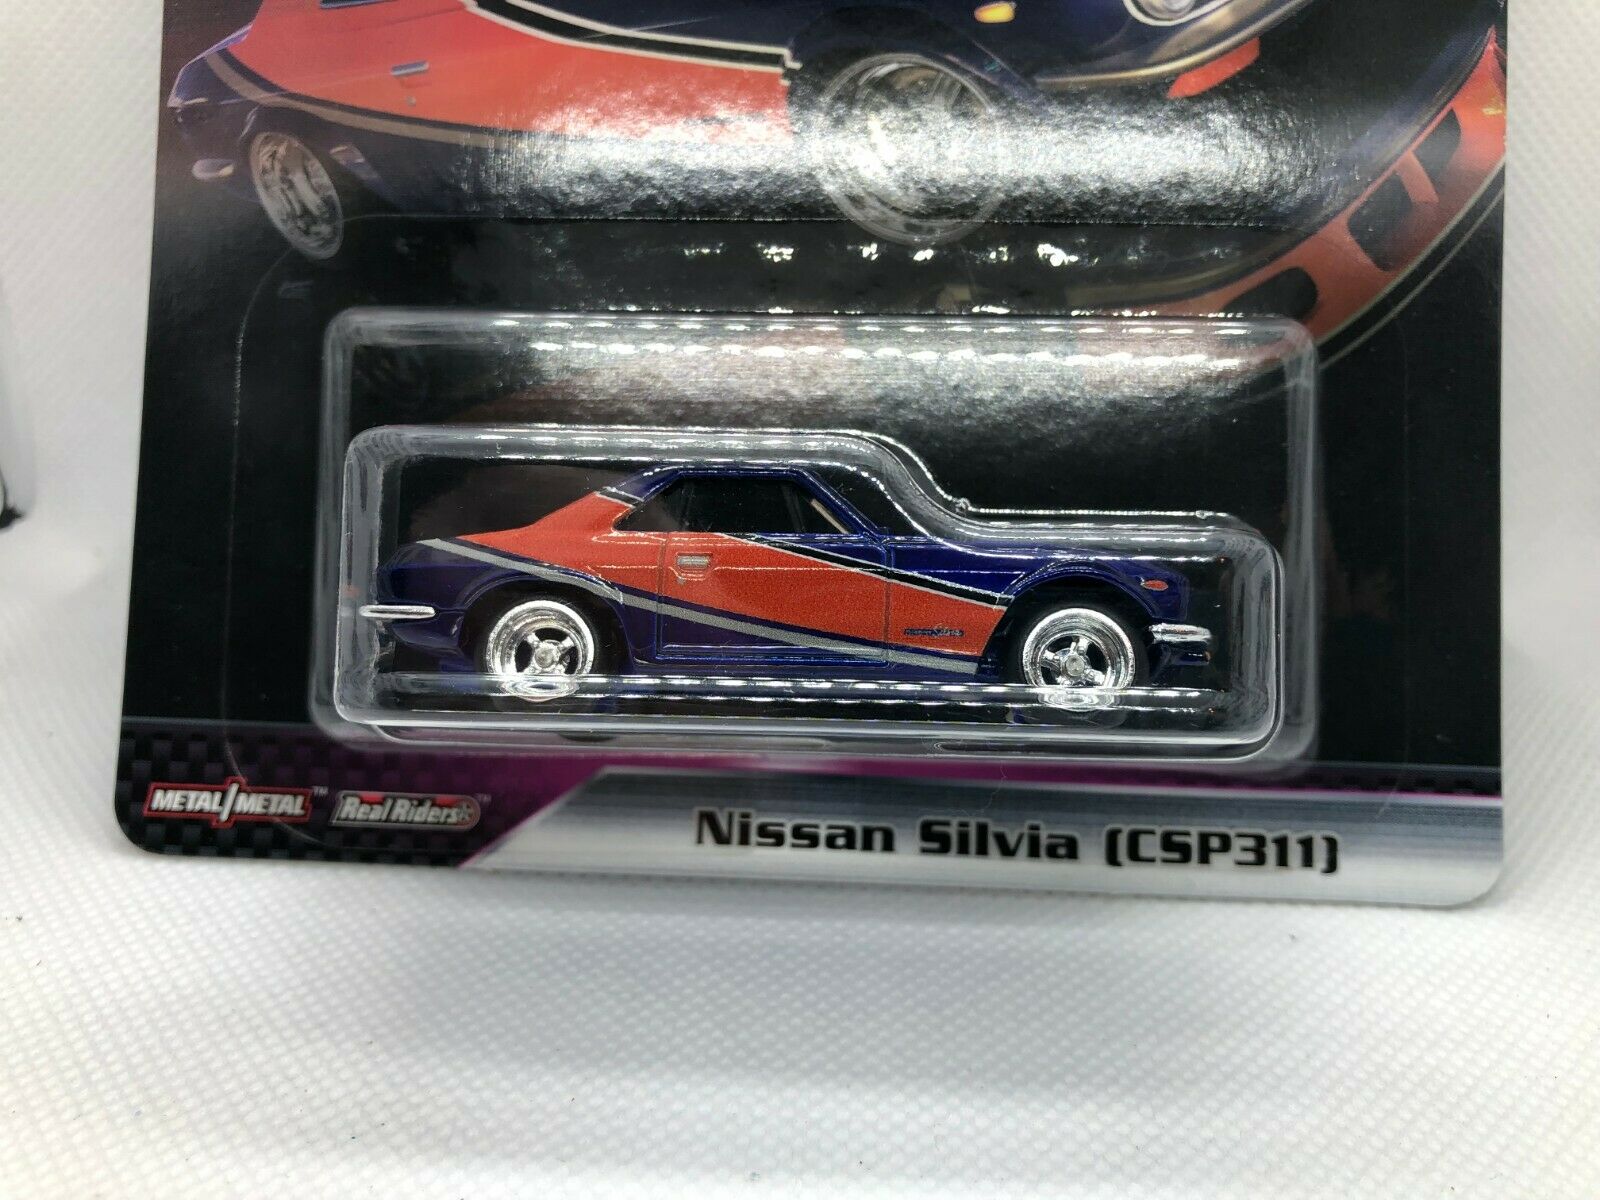 Nissan Silvia [CSP311]